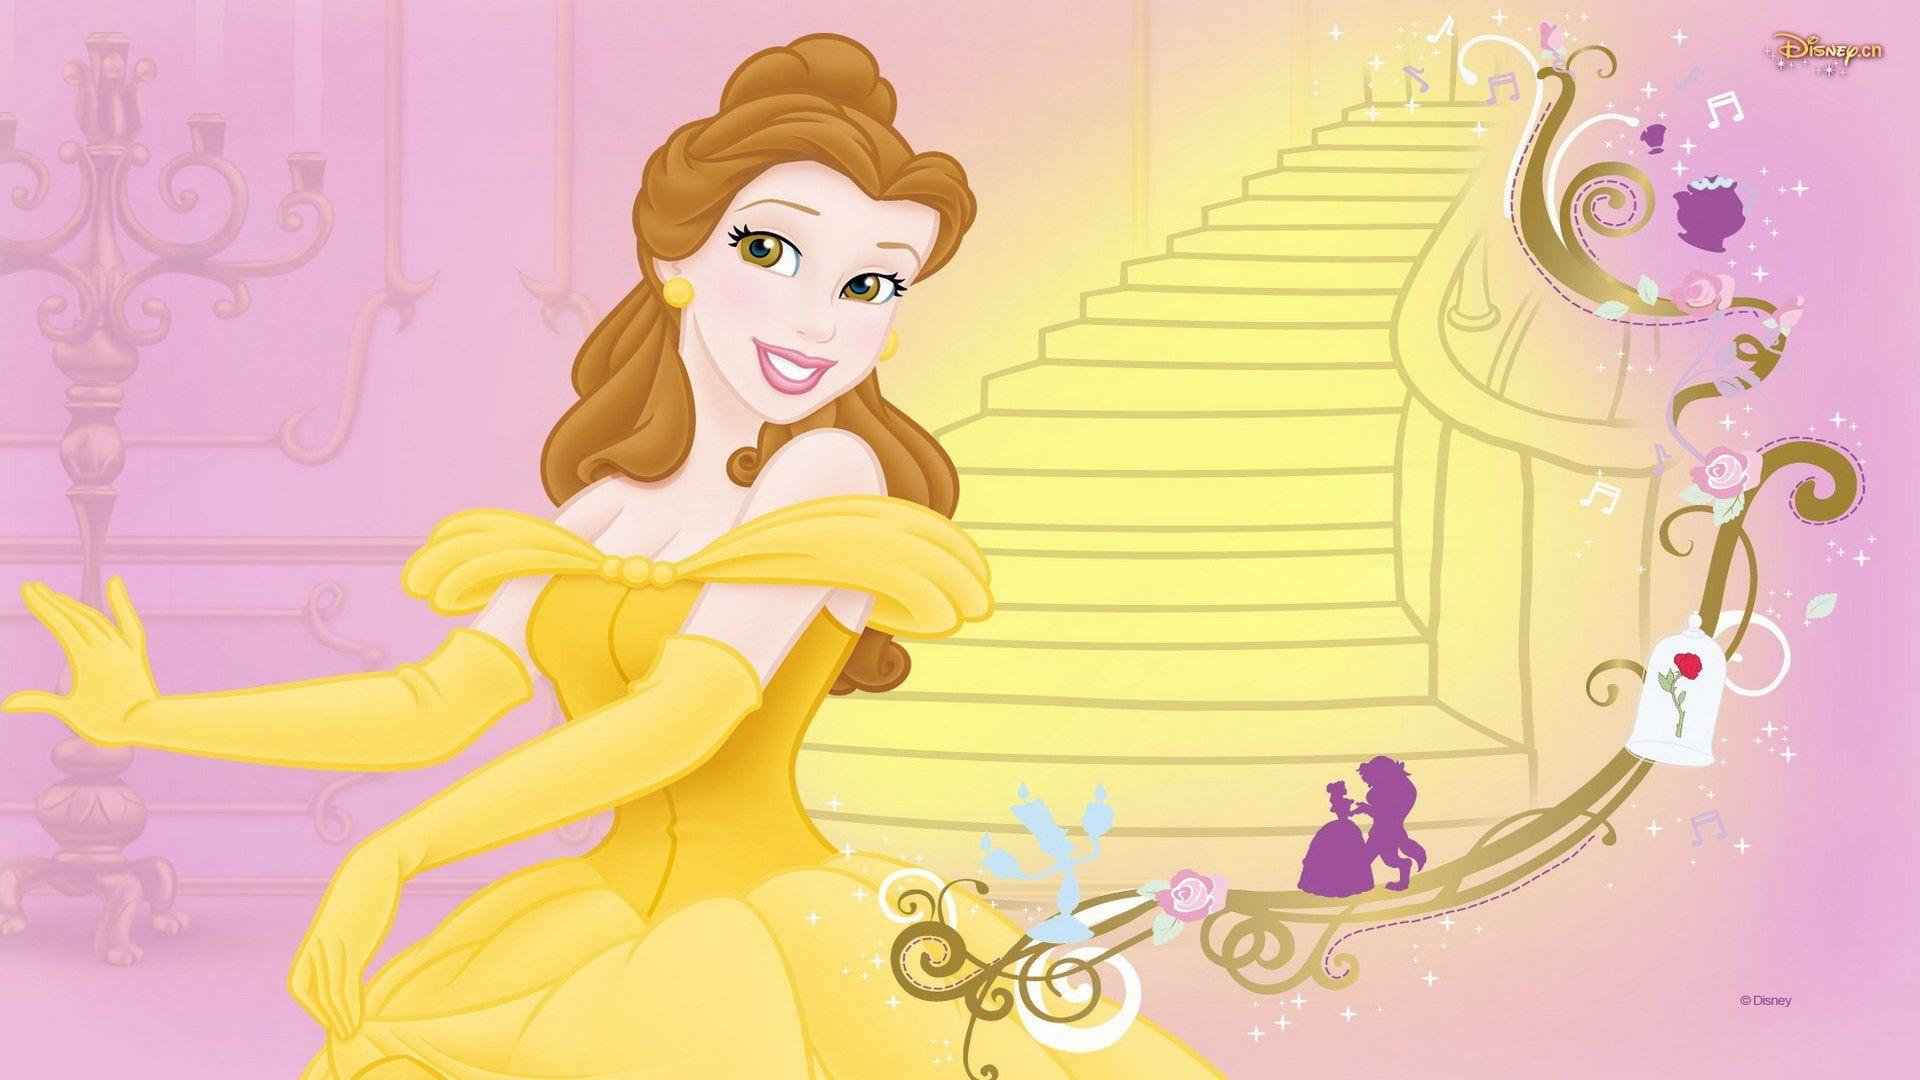 Disney Princess Belle 637209